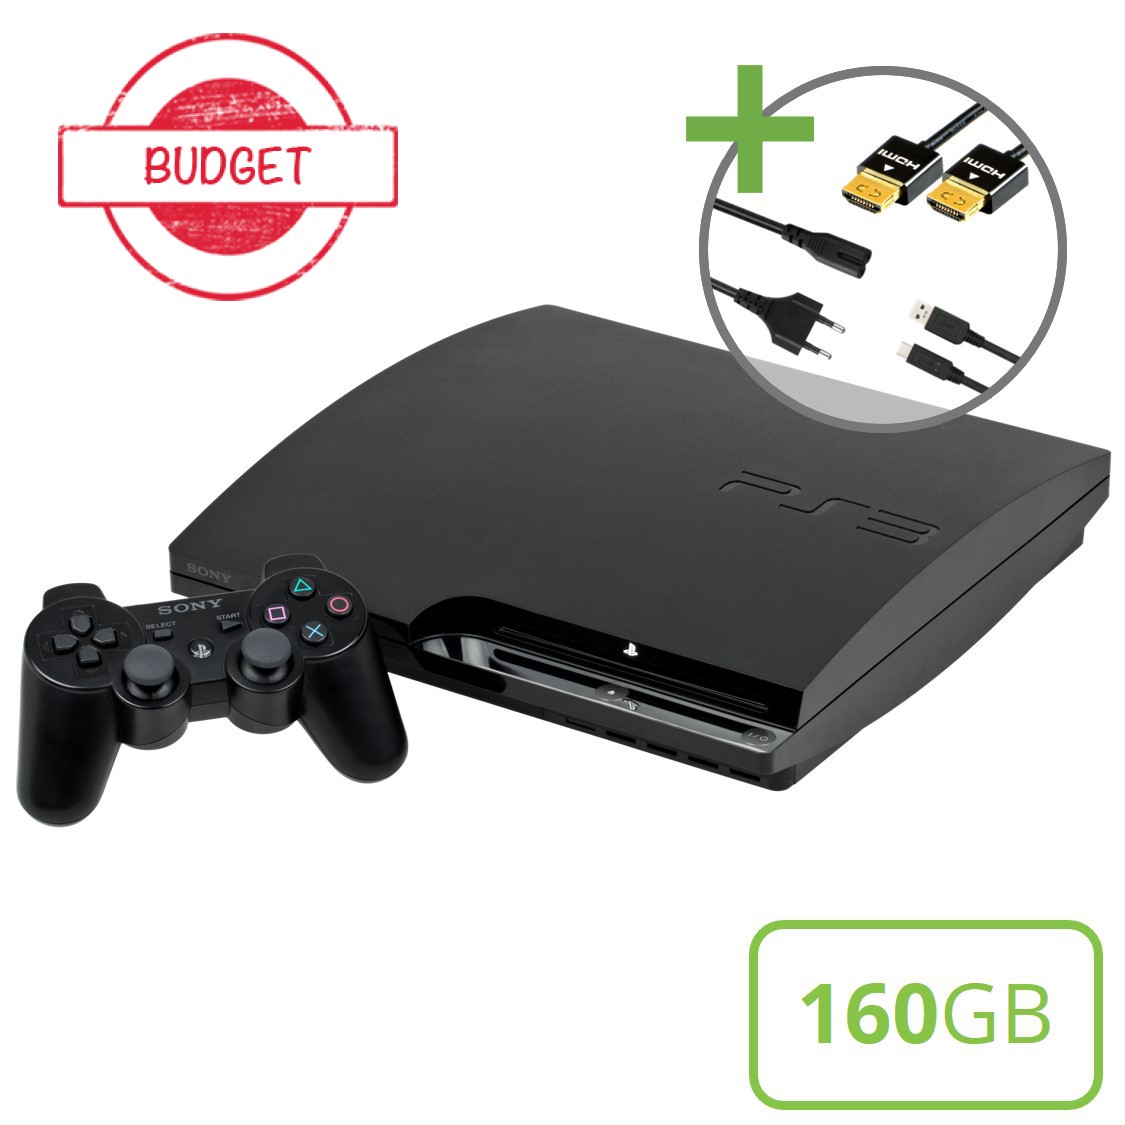 Sony PlayStation 3 Slim (160GB) Starter Pack - DualShock Edition - Budget - Playstation 3 Hardware